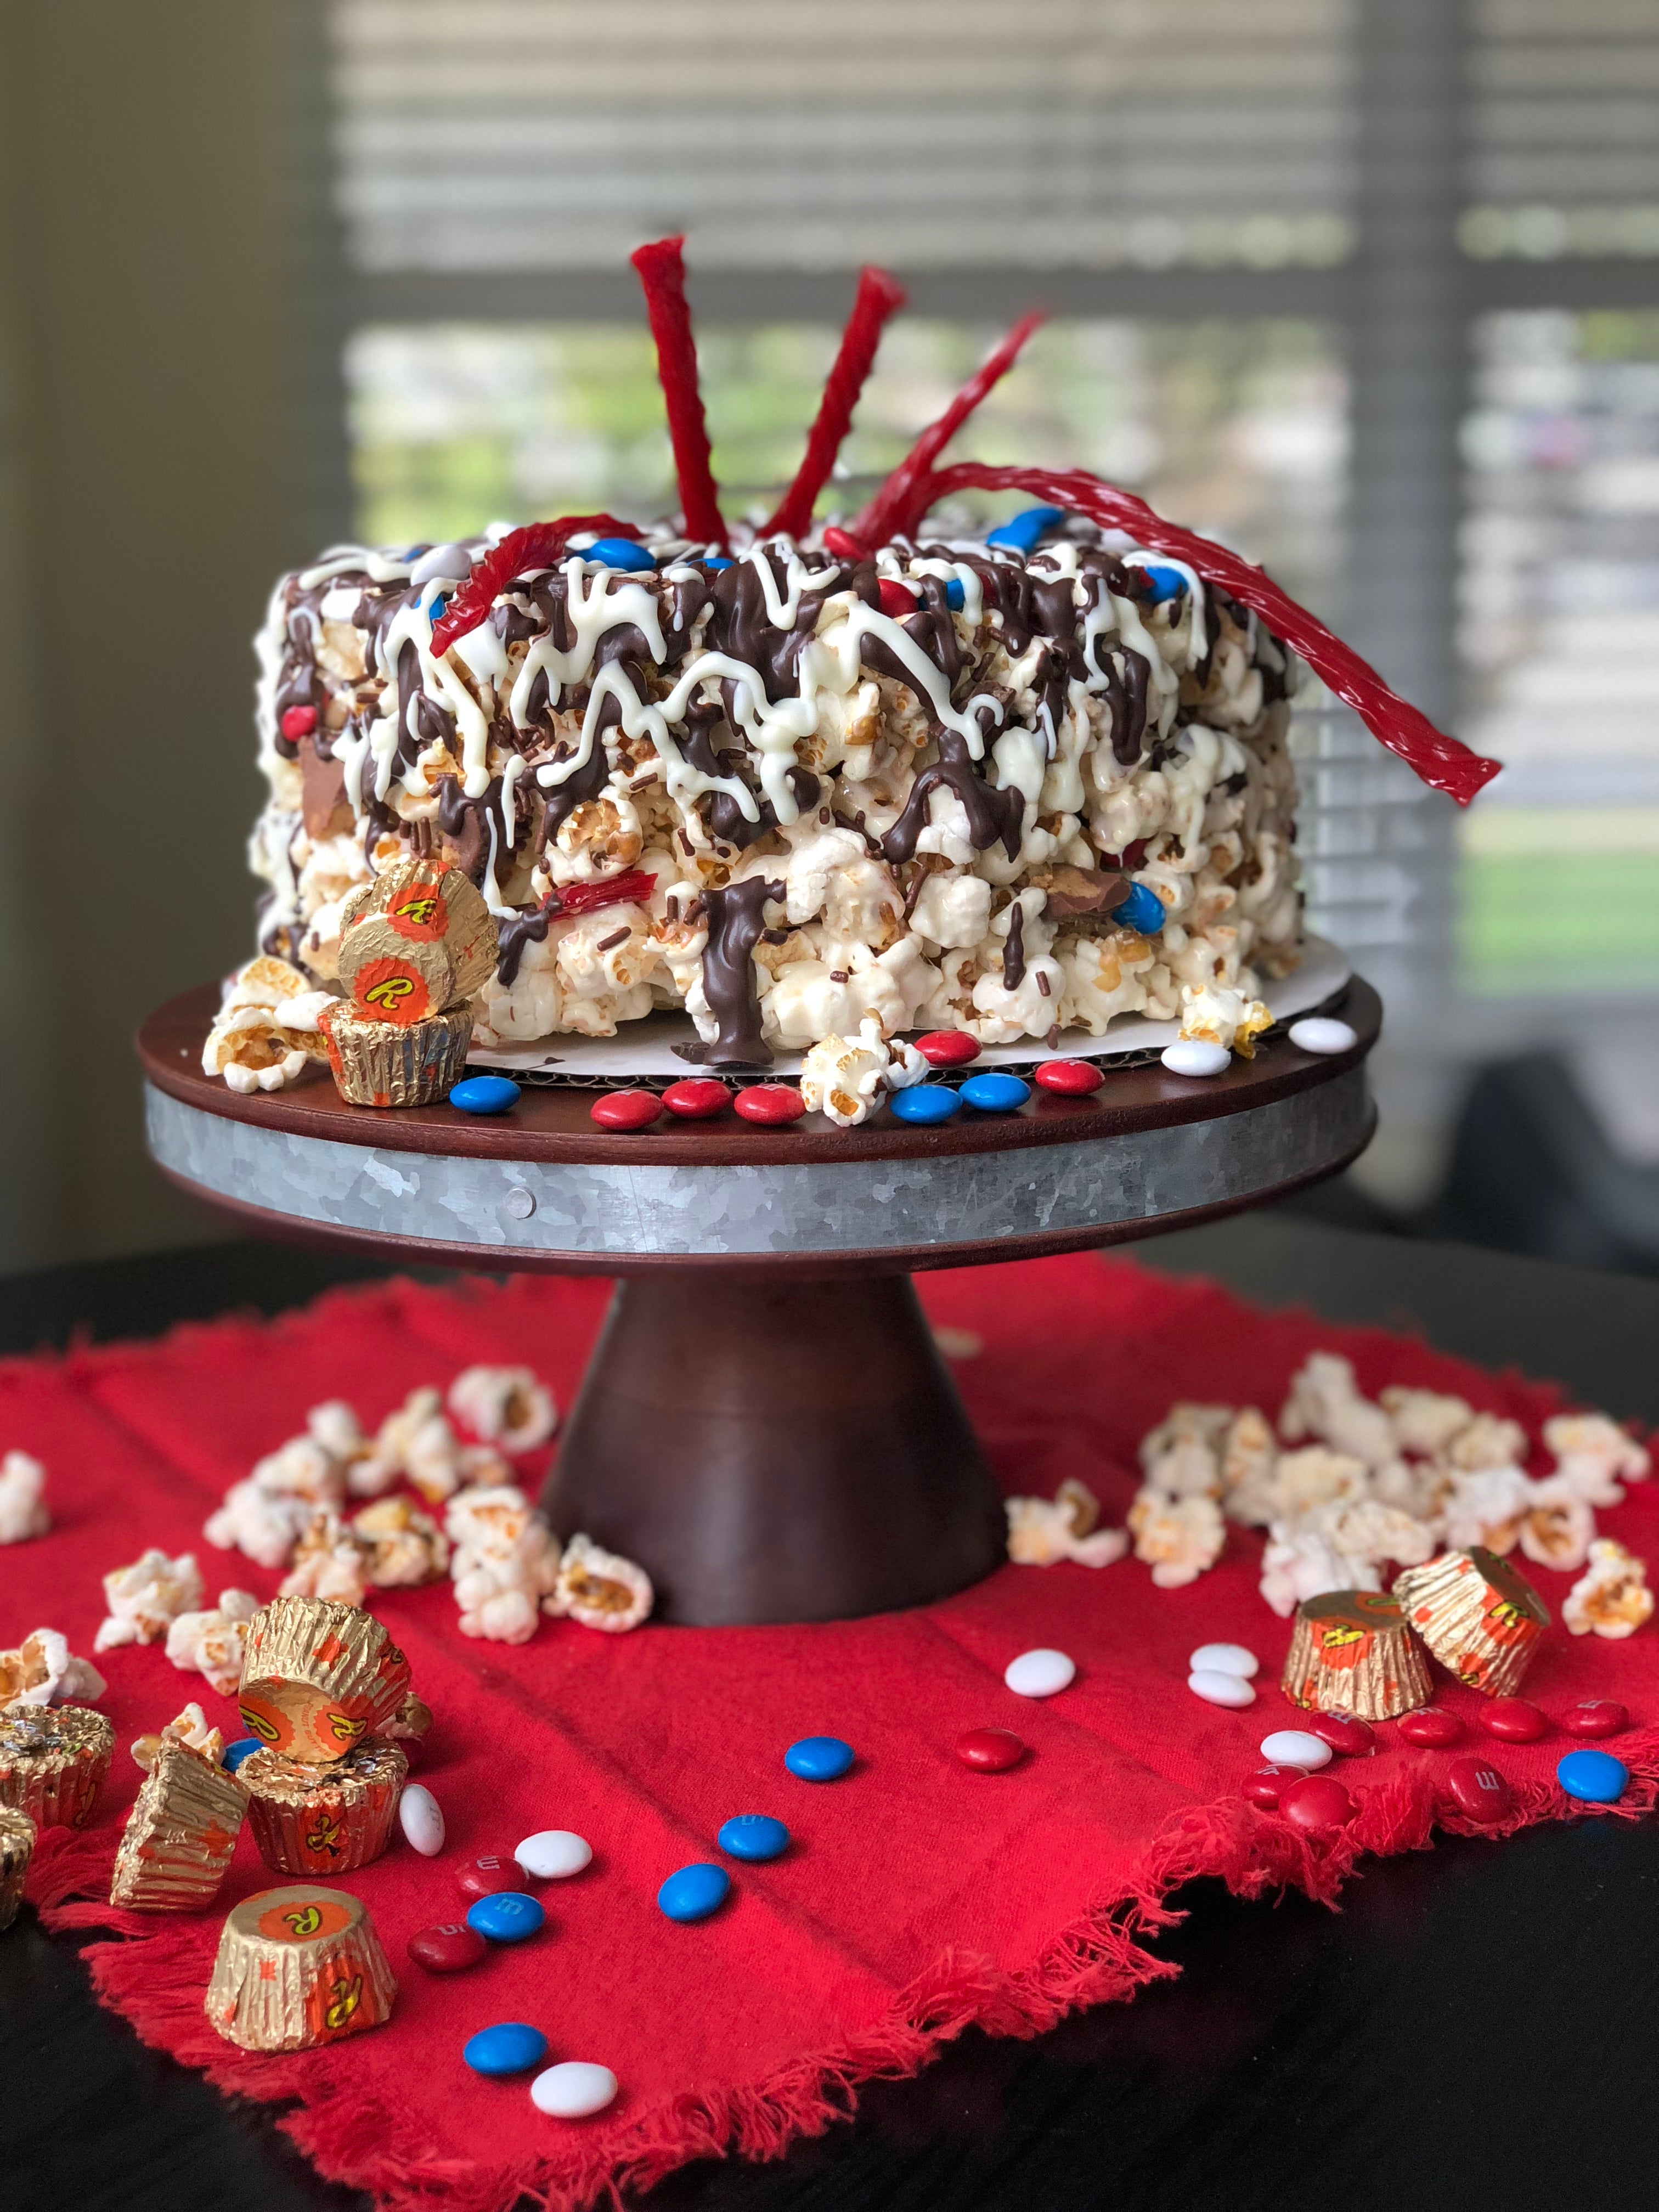 Popcorn Birthday Cake – With Sprinkles on Top